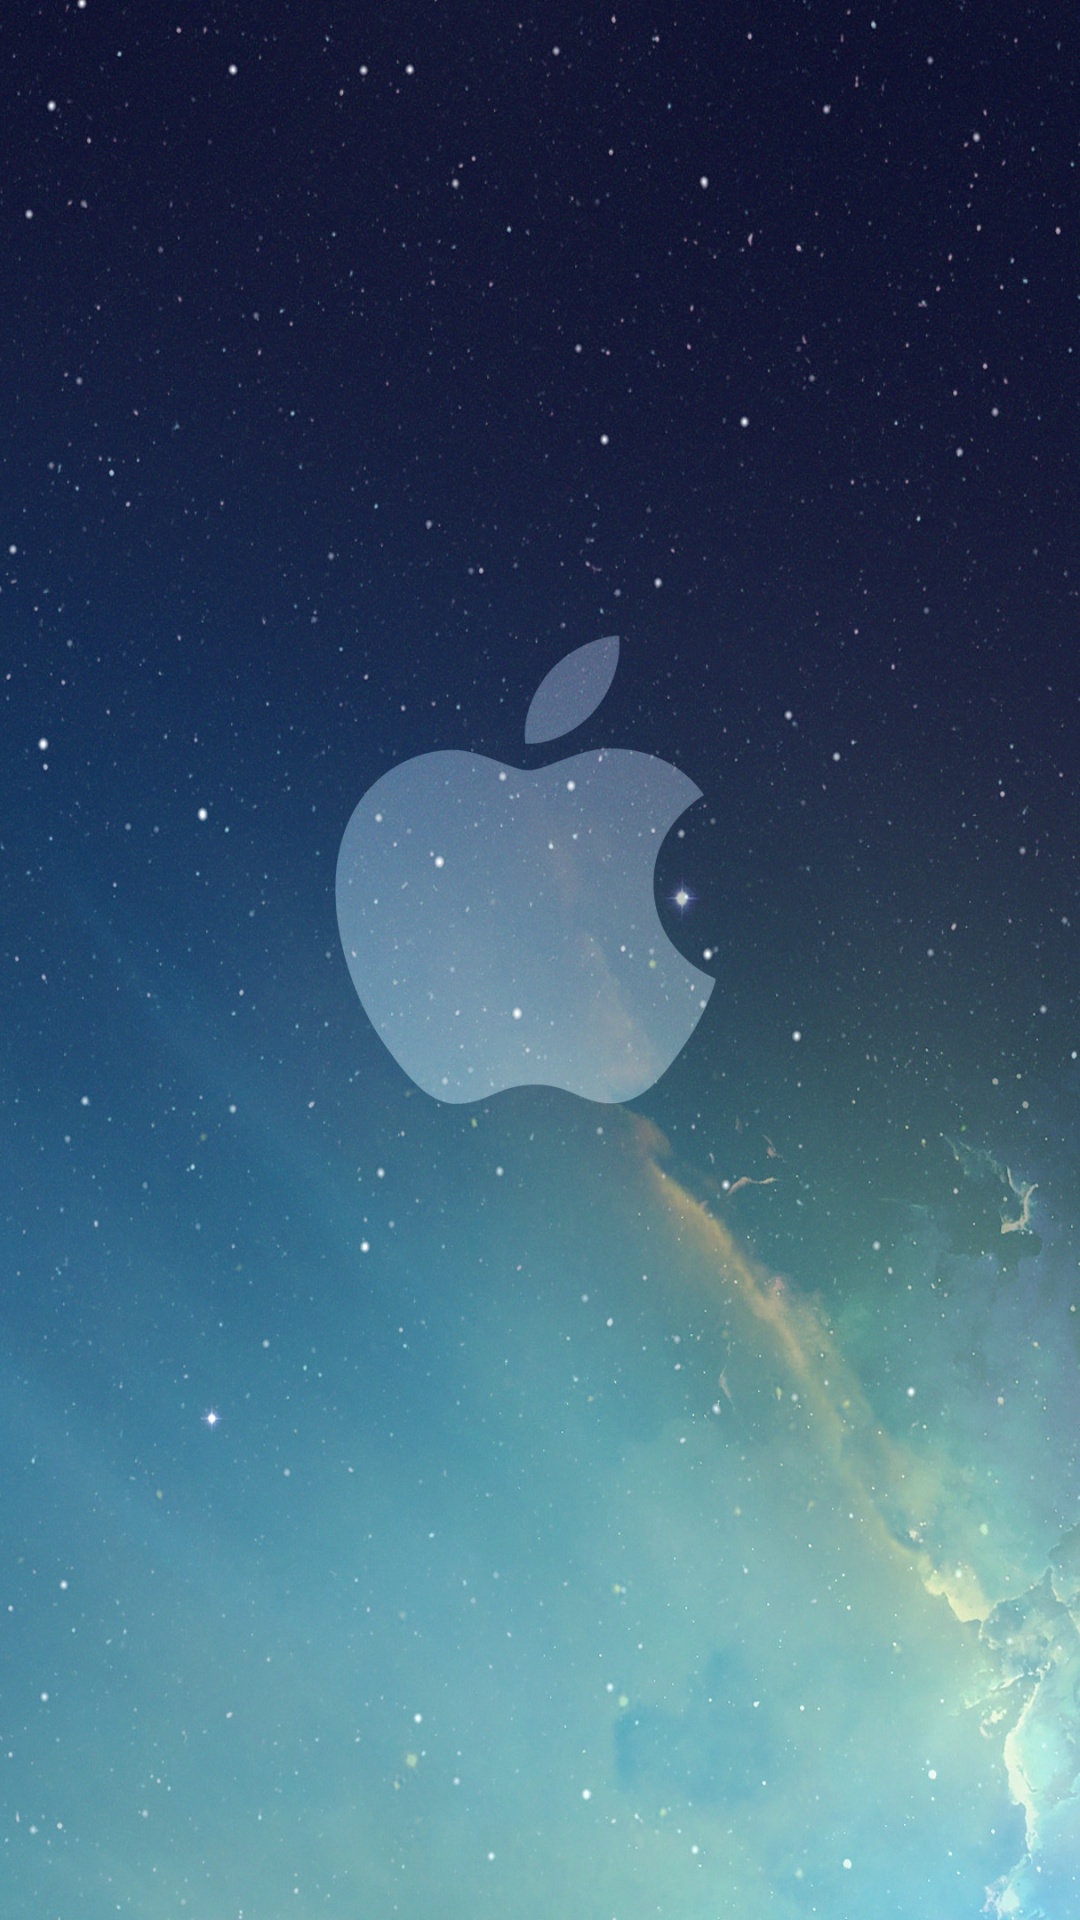 IOS 7, Ios, Apple, Blue, Atmosphere. Wallpaper in 1080x1920 Resolution